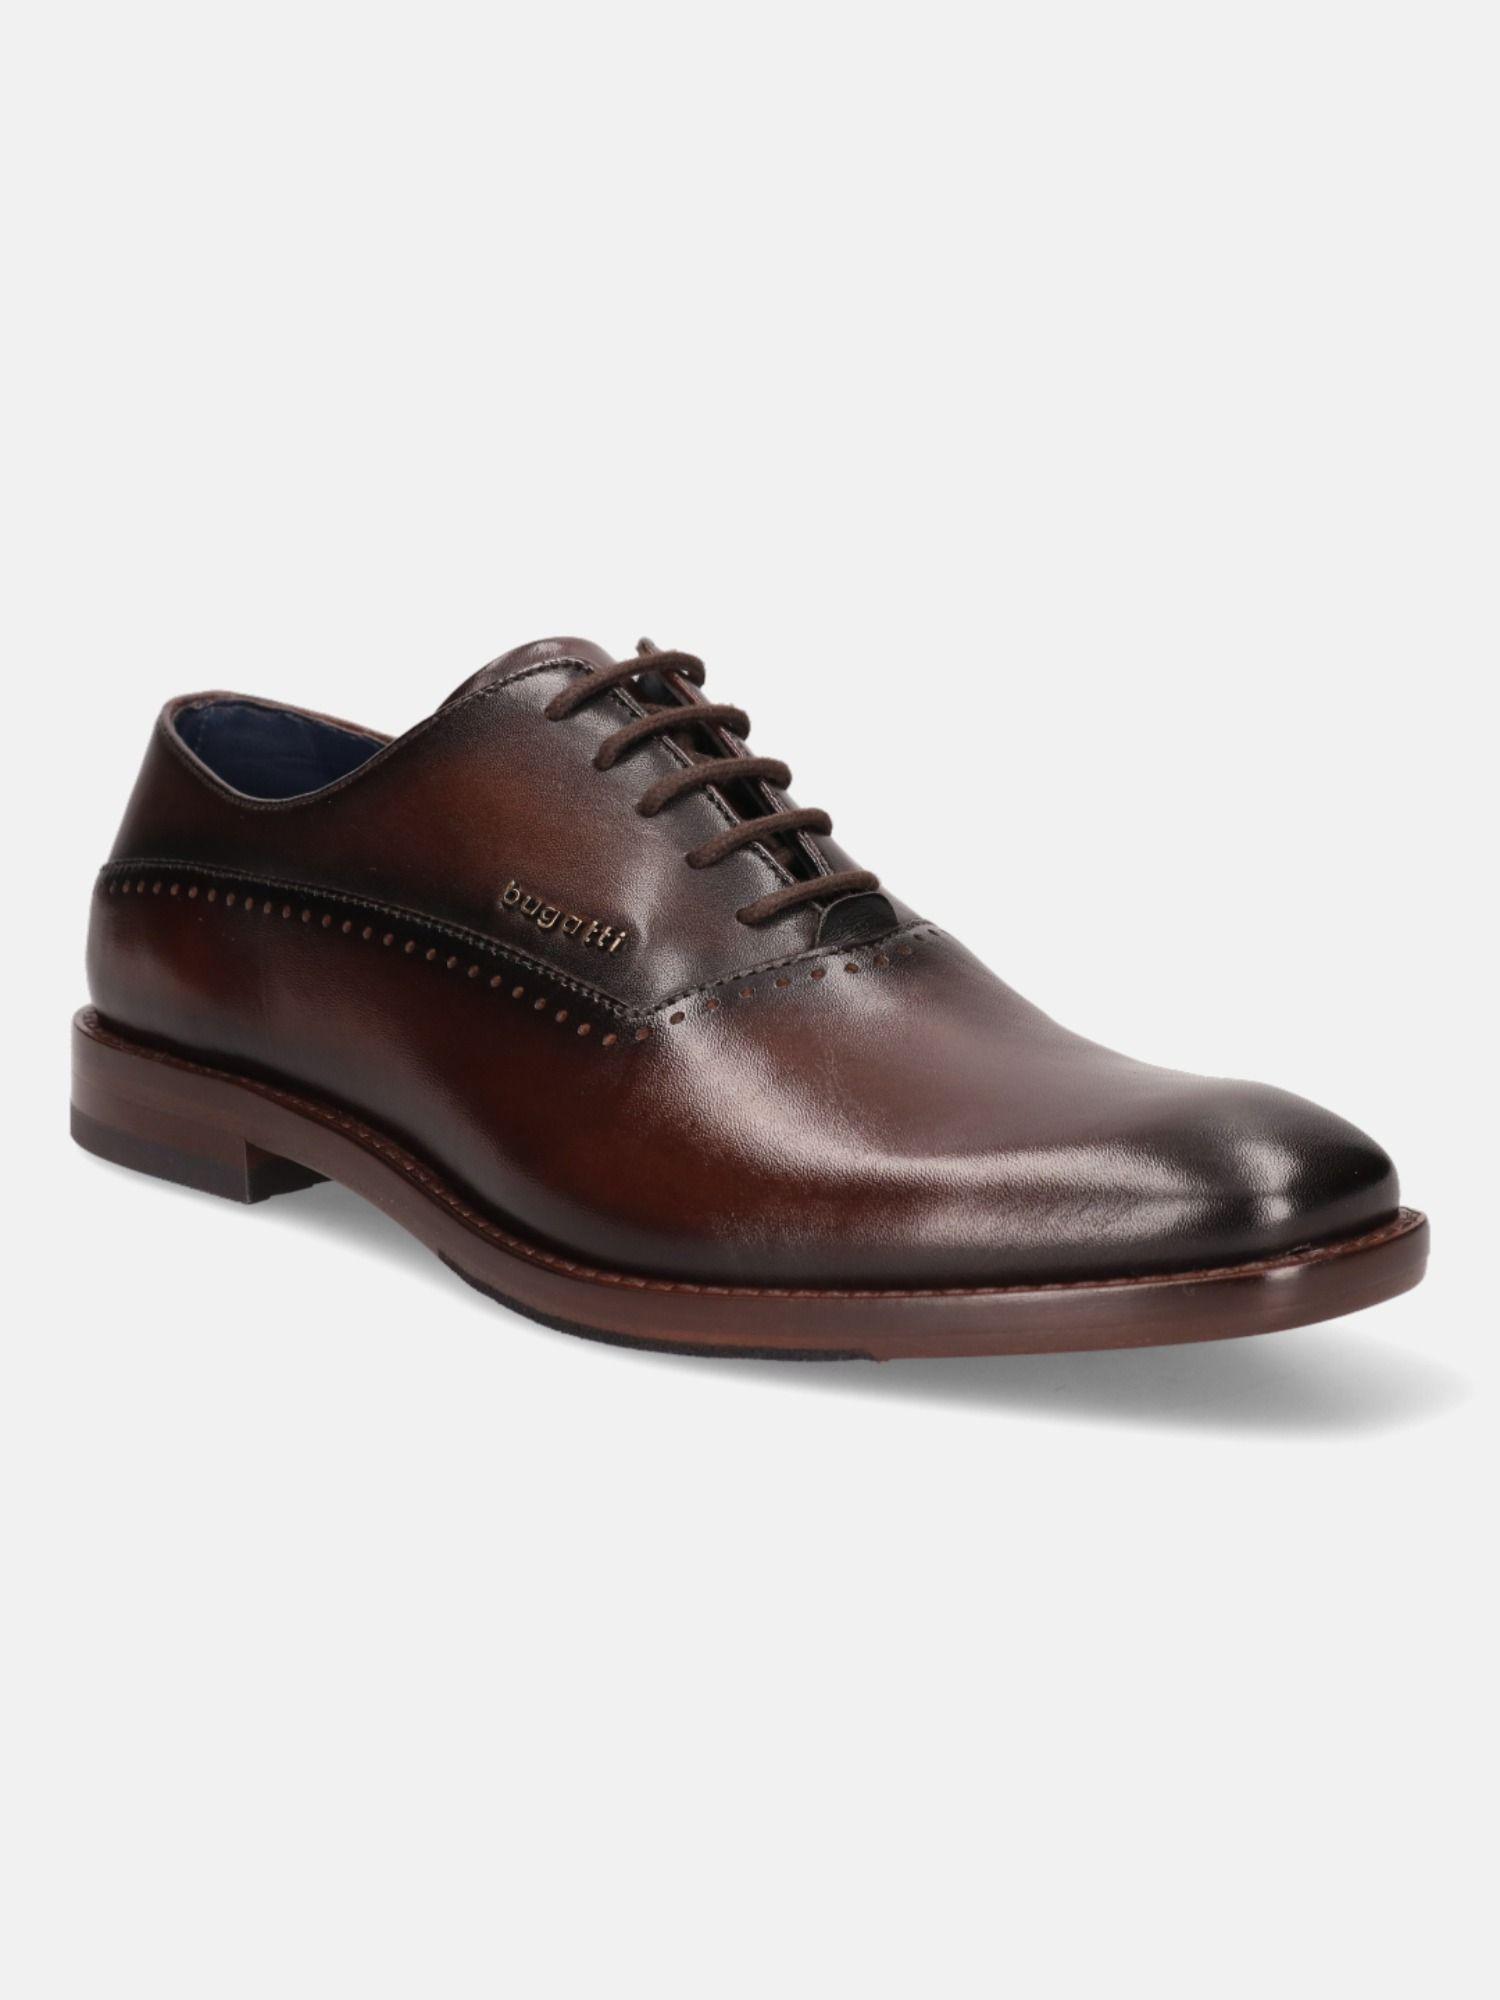 mansaro bordo burgundy & brown men leather oxfords formal shoes